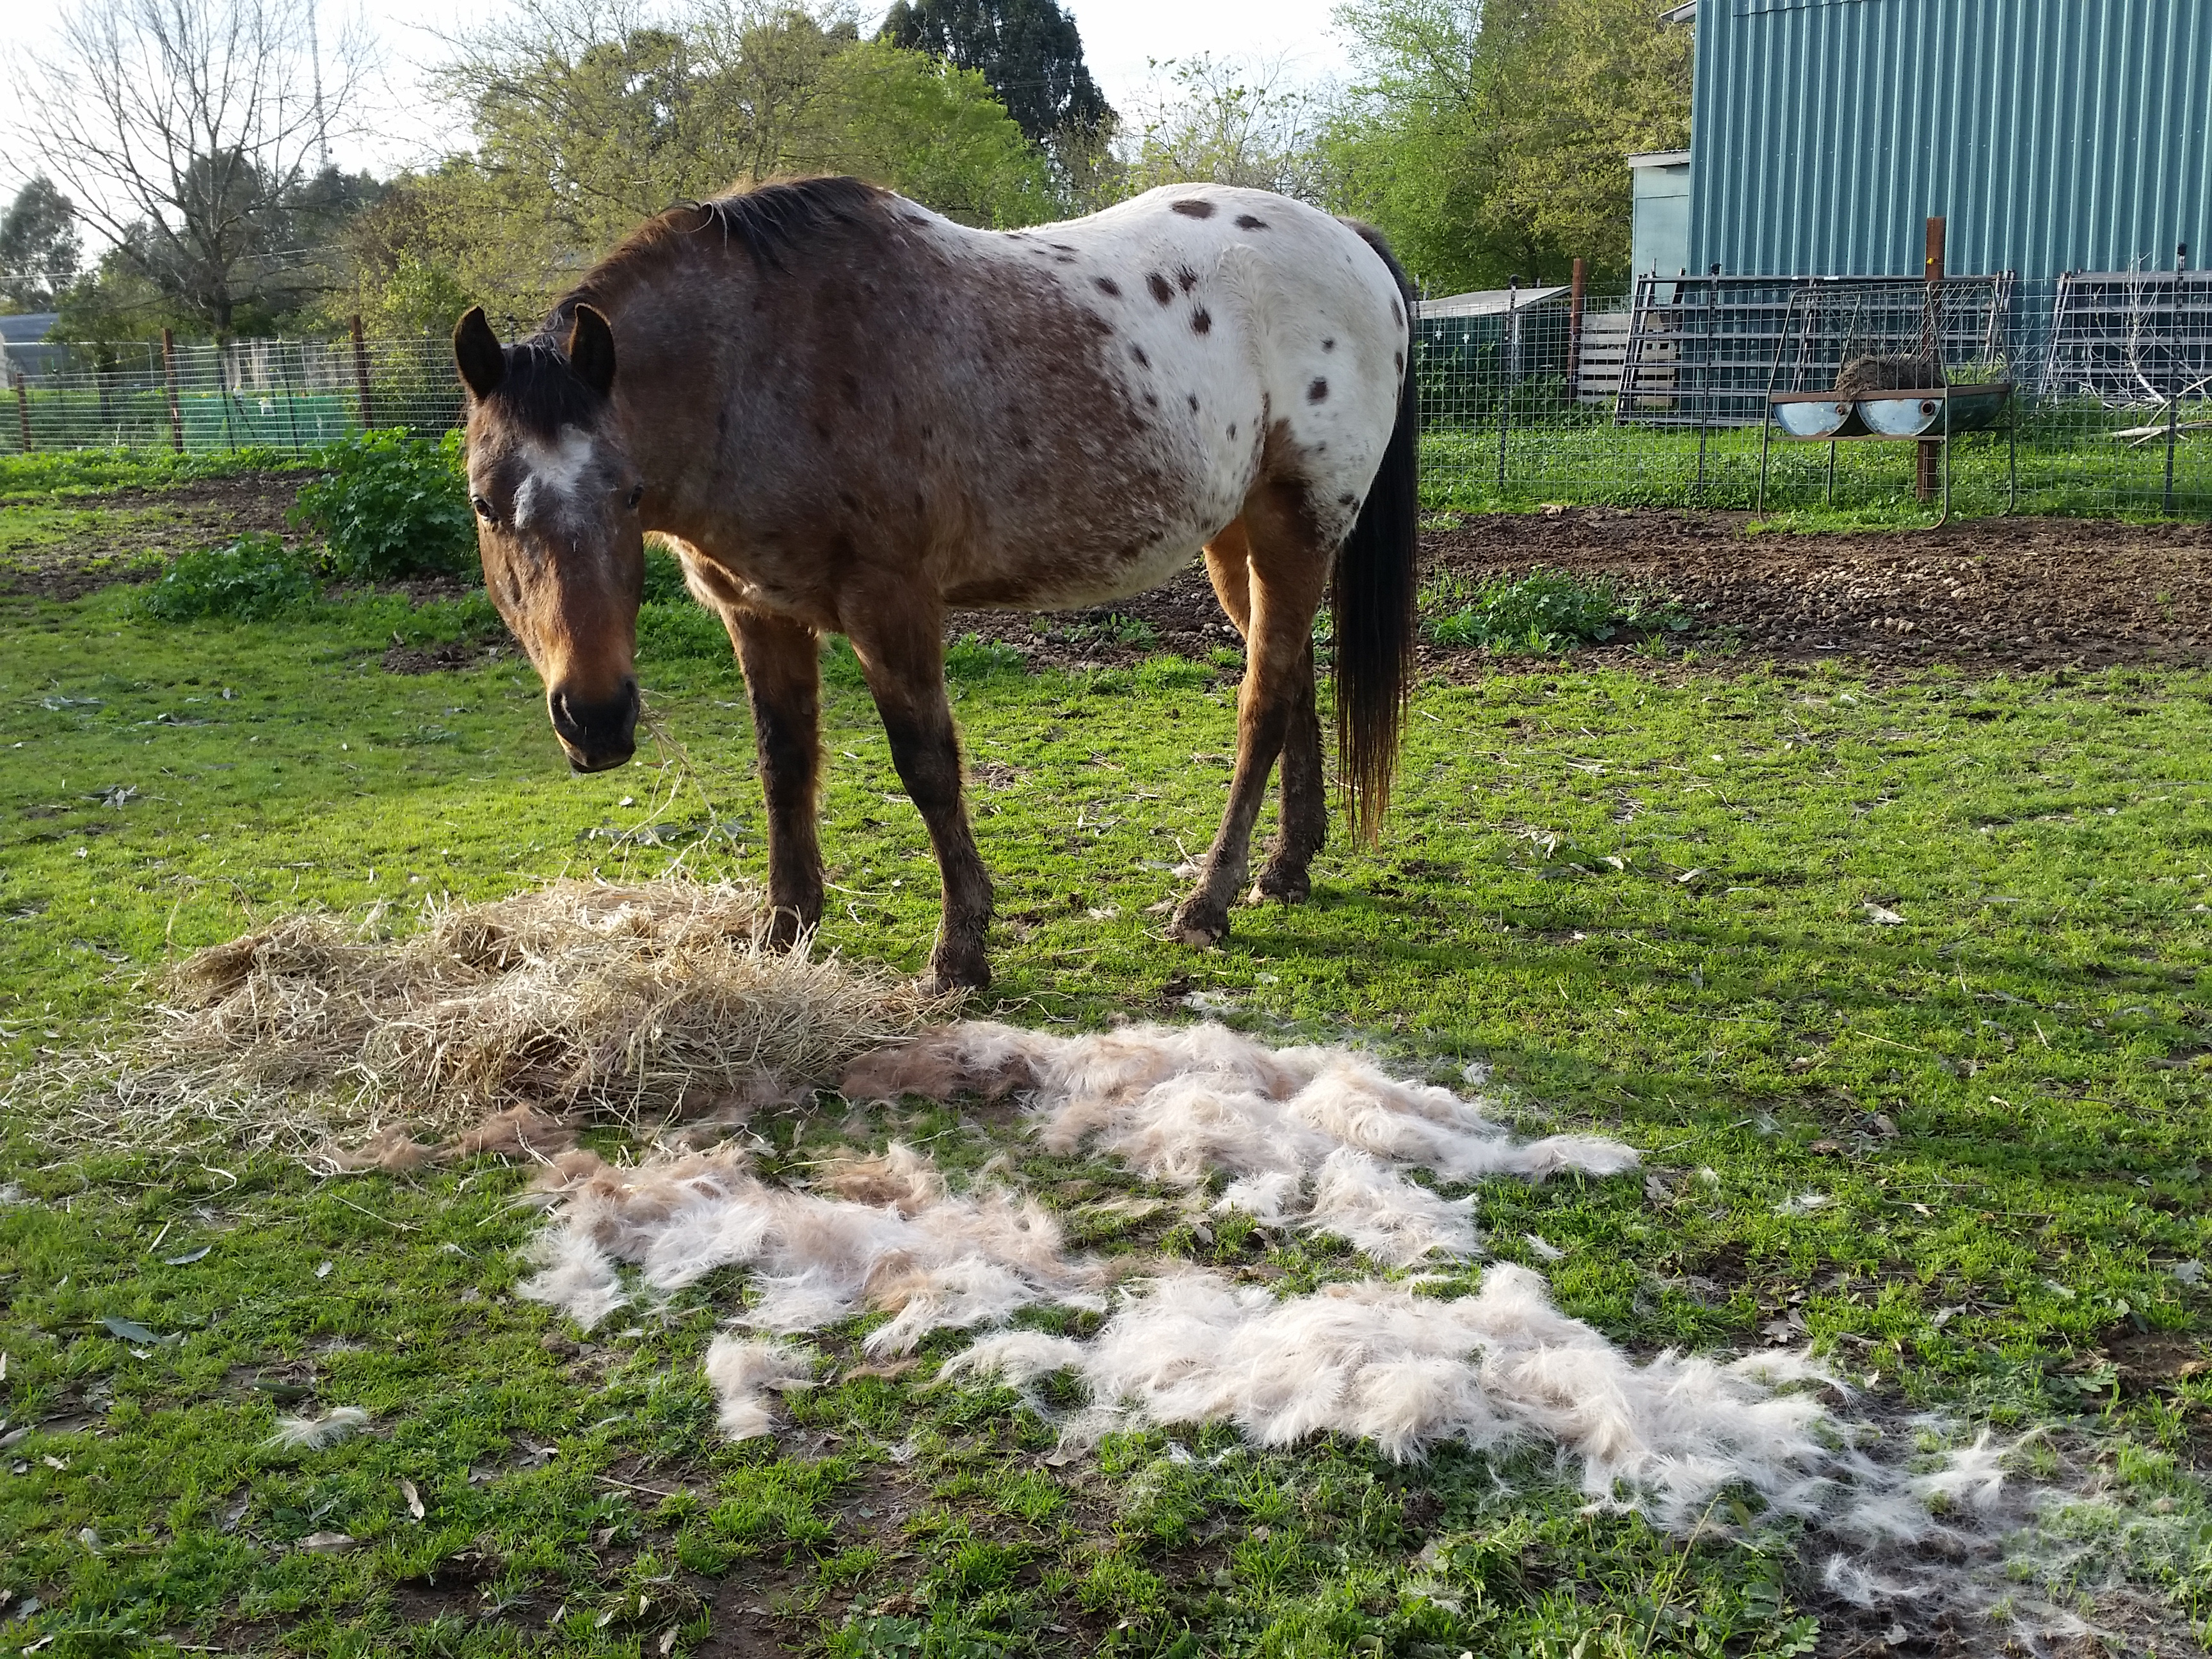 An Appaloosa horse shedding hair